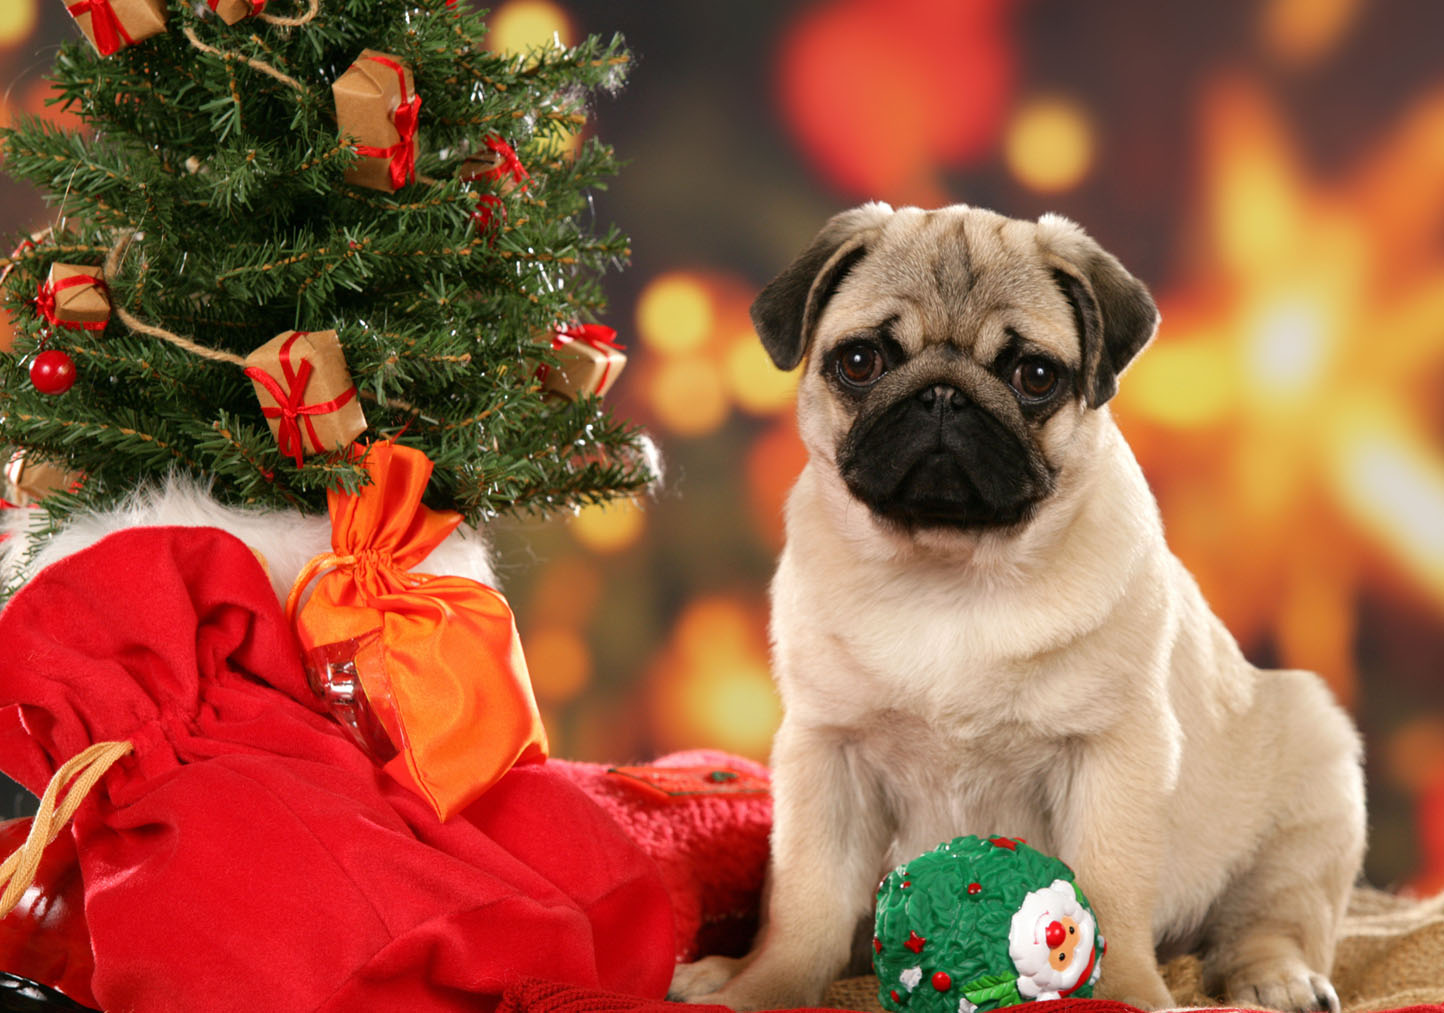 http://2.bp.blogspot.com/-IeKwbh90qck/UMYPiI_3bEI/AAAAAAAADLs/uHqzw2Efqhk/s1600/cute-pug-with-christmas-gifts.jpg